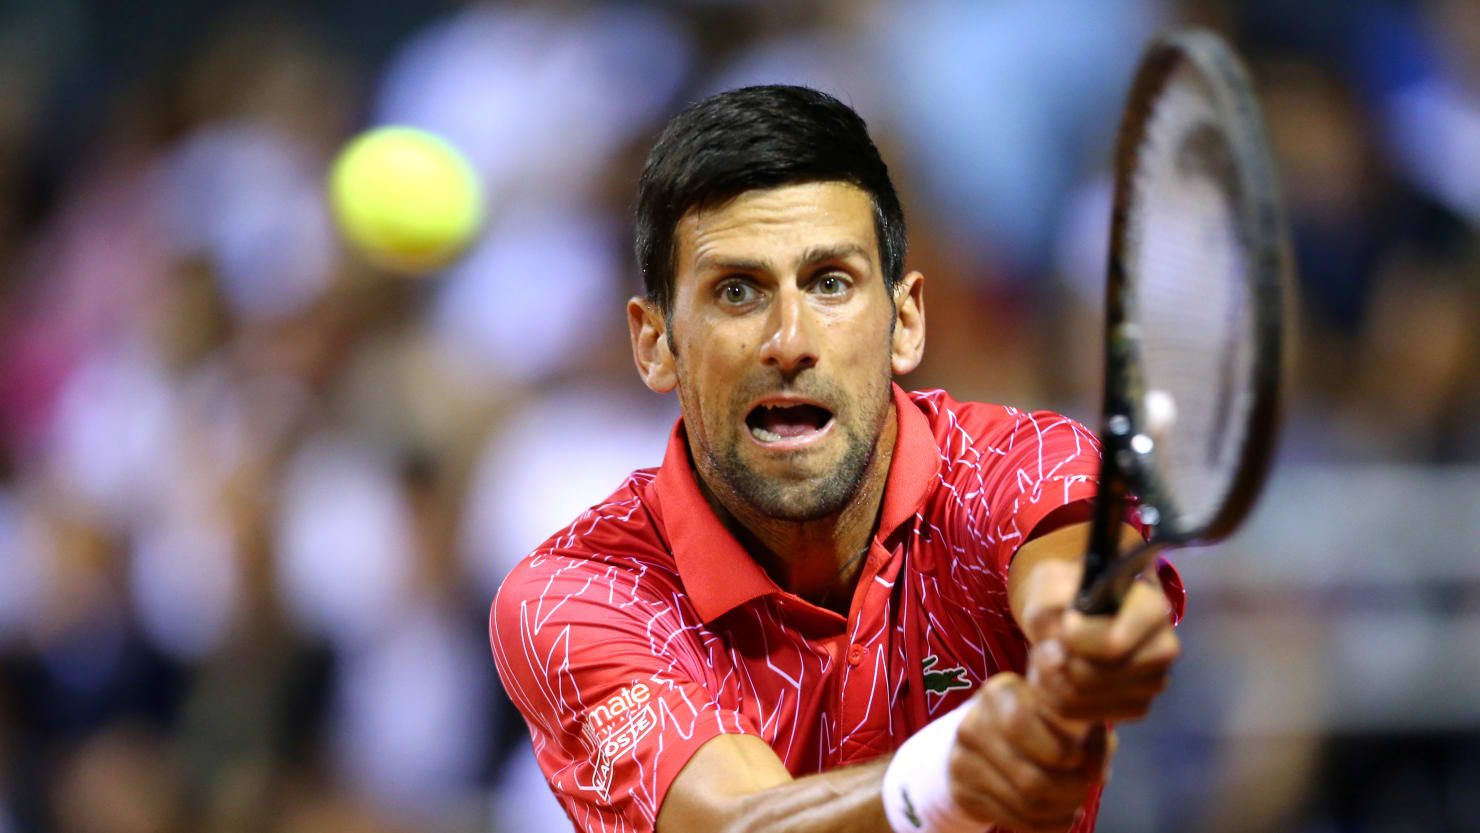 Two Players Test Positive for Coronavirus at Novak Djokovics Boneheaded Tennis Event